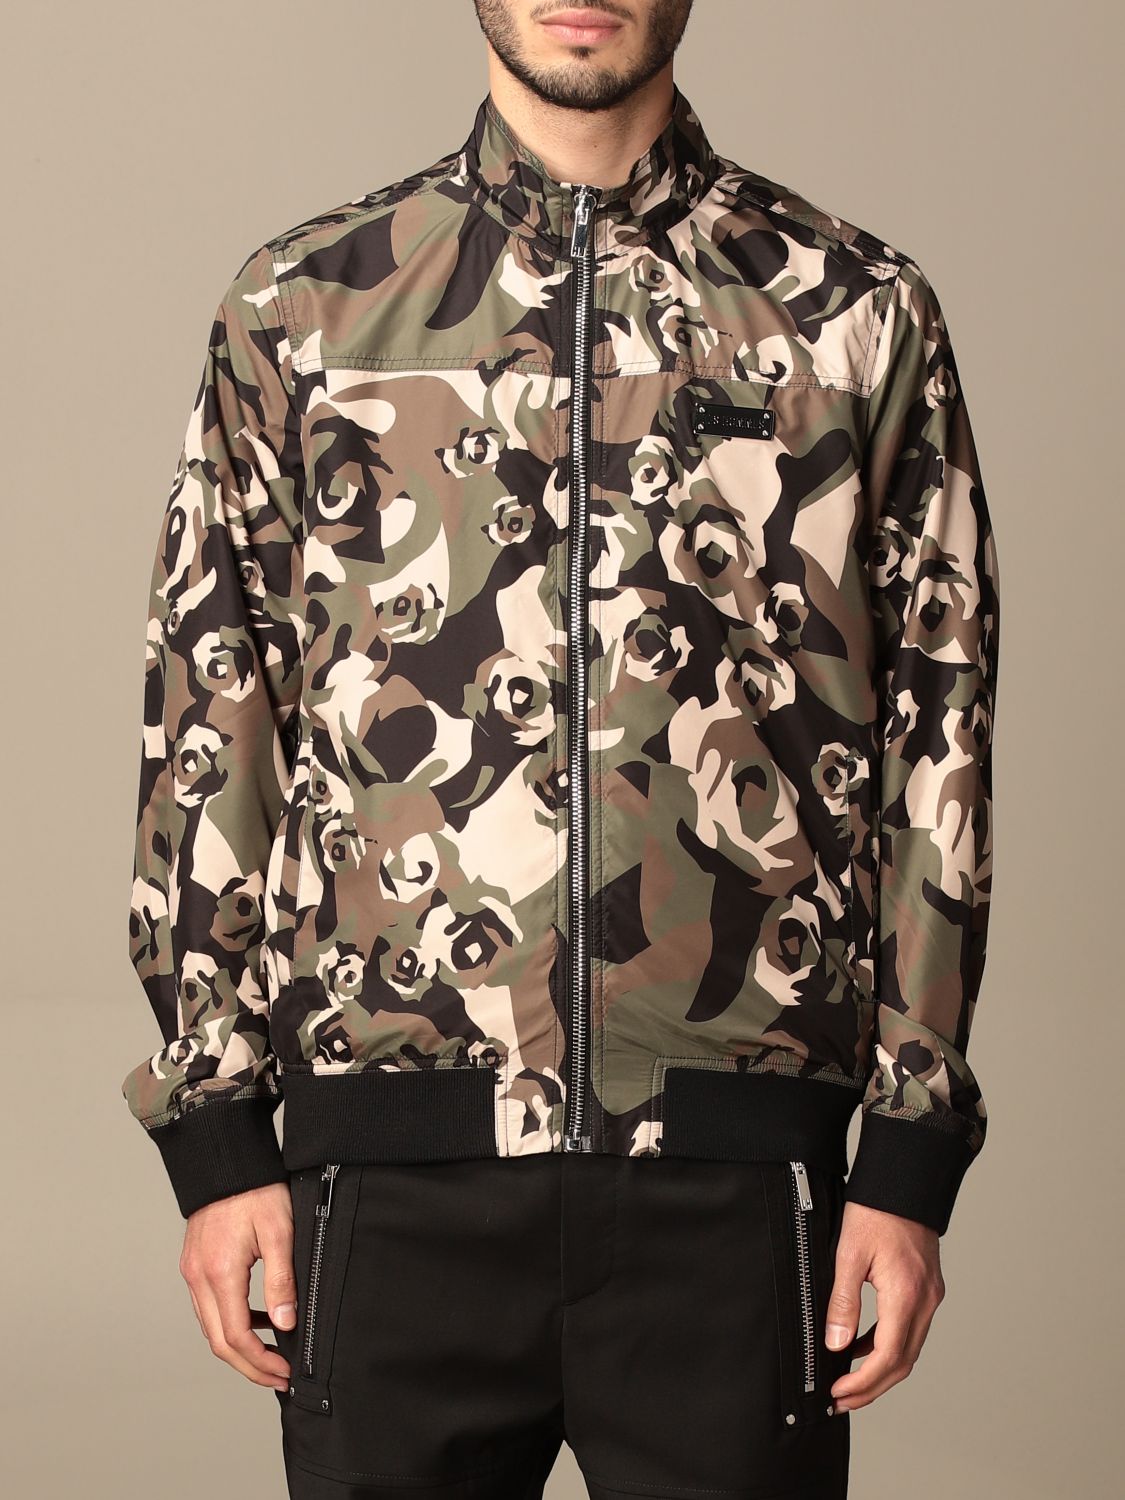 Early Prove Sky Les Hommes Outlet: patterned nylon jacket - Black | Les Hommes jacket  LKO101282P online on GIGLIO.COM